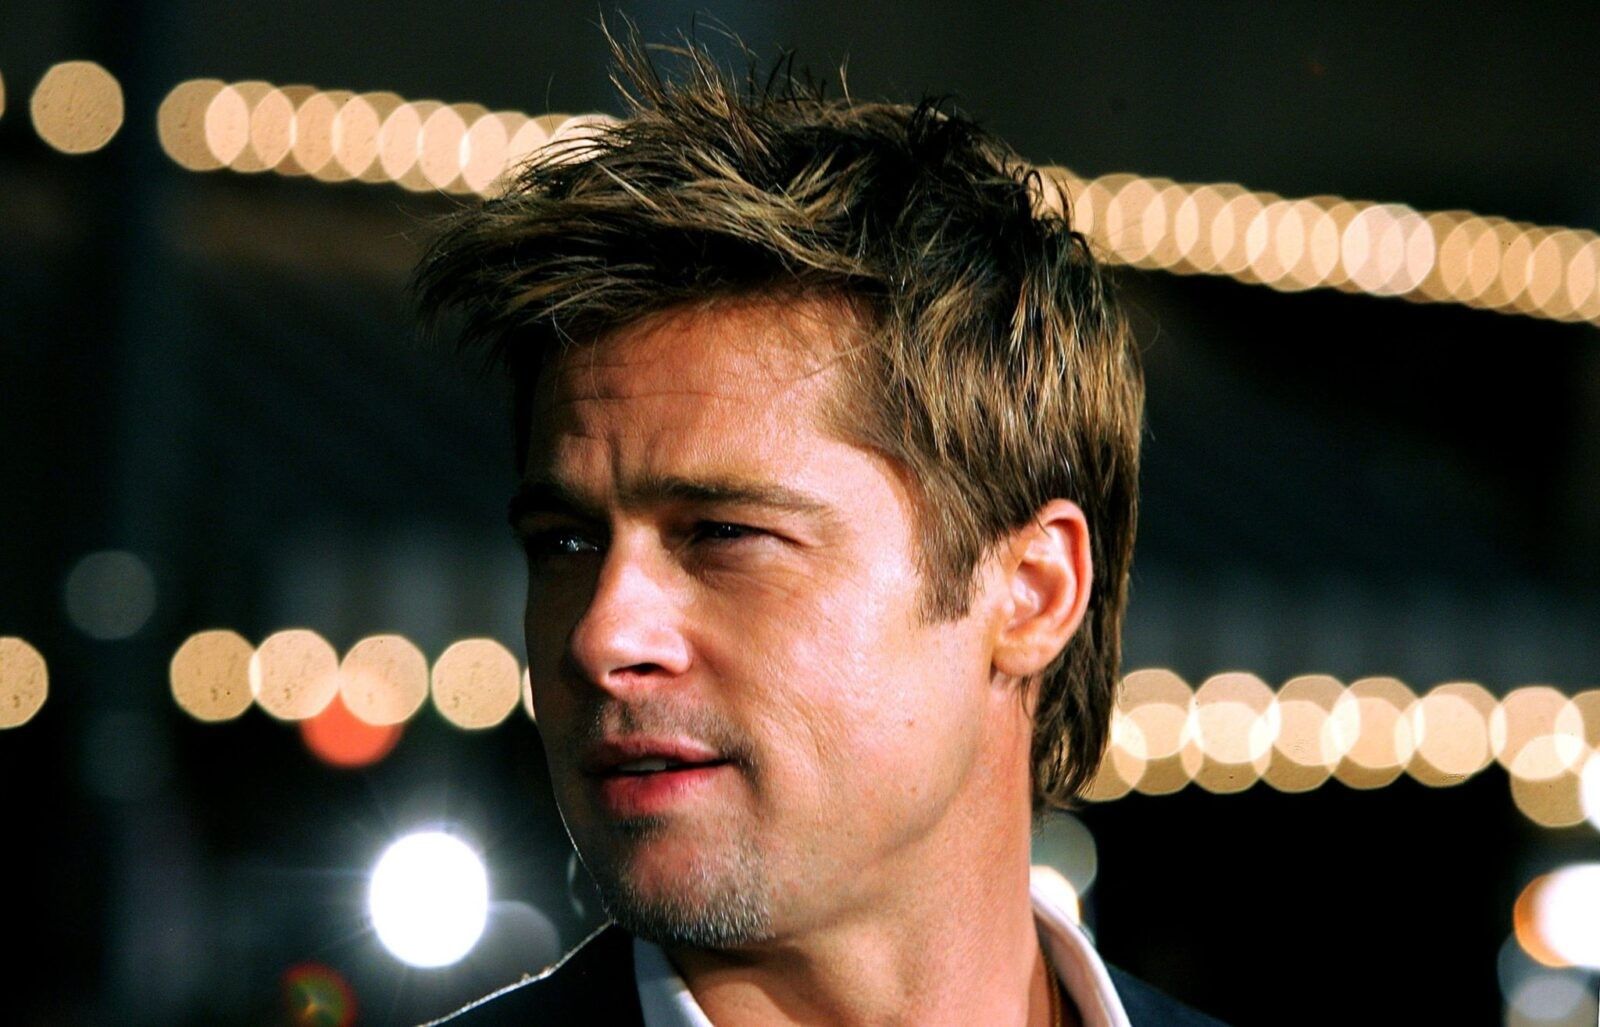 Brad-Pitt